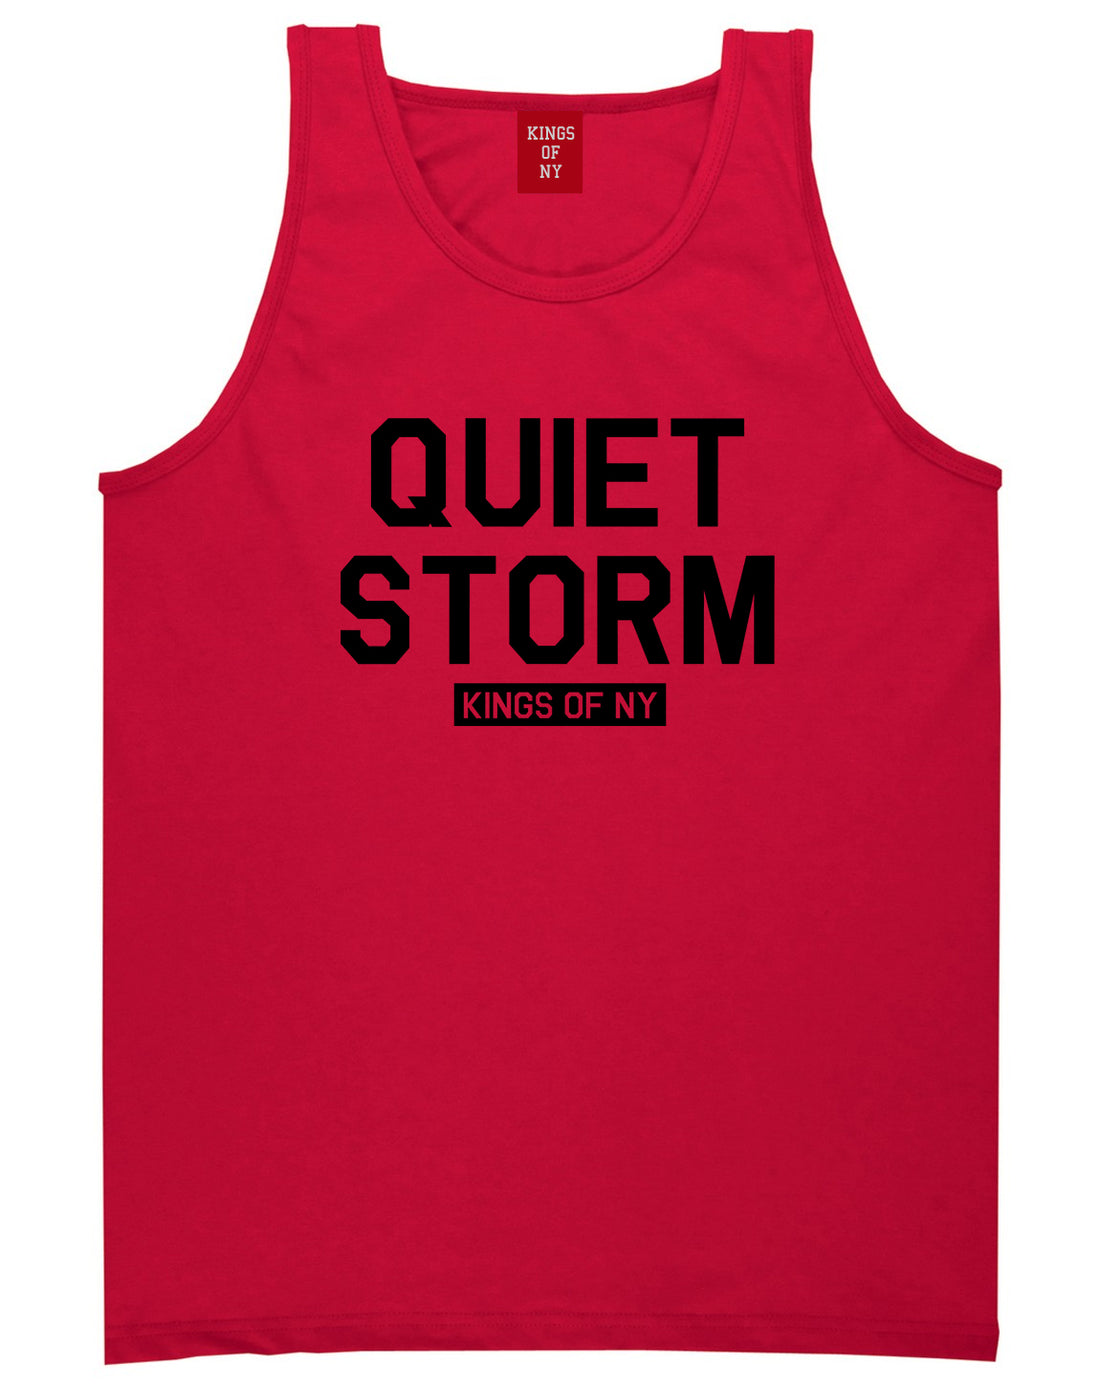 Quiet Storm Kings Of NY Mens Tank Top Shirt Red